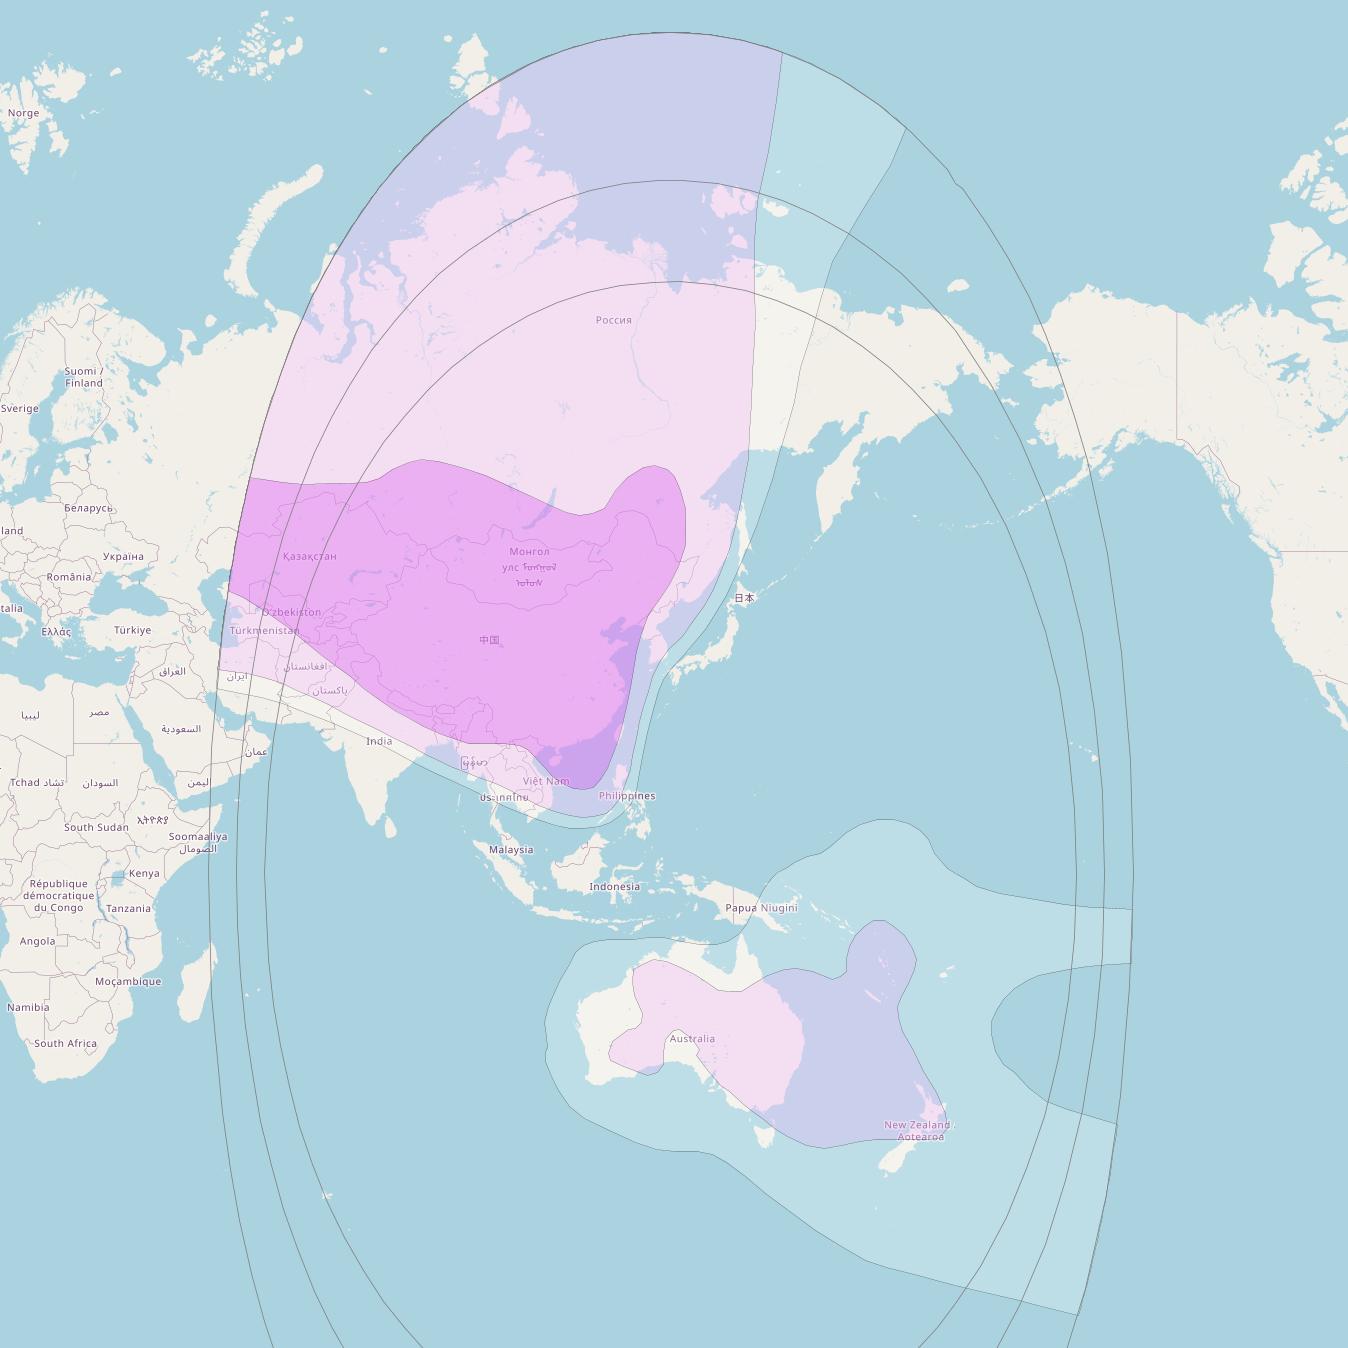 Chinasat 6C at 130° E downlink C-band China Aus+NZ+South Pacific beam coverage map